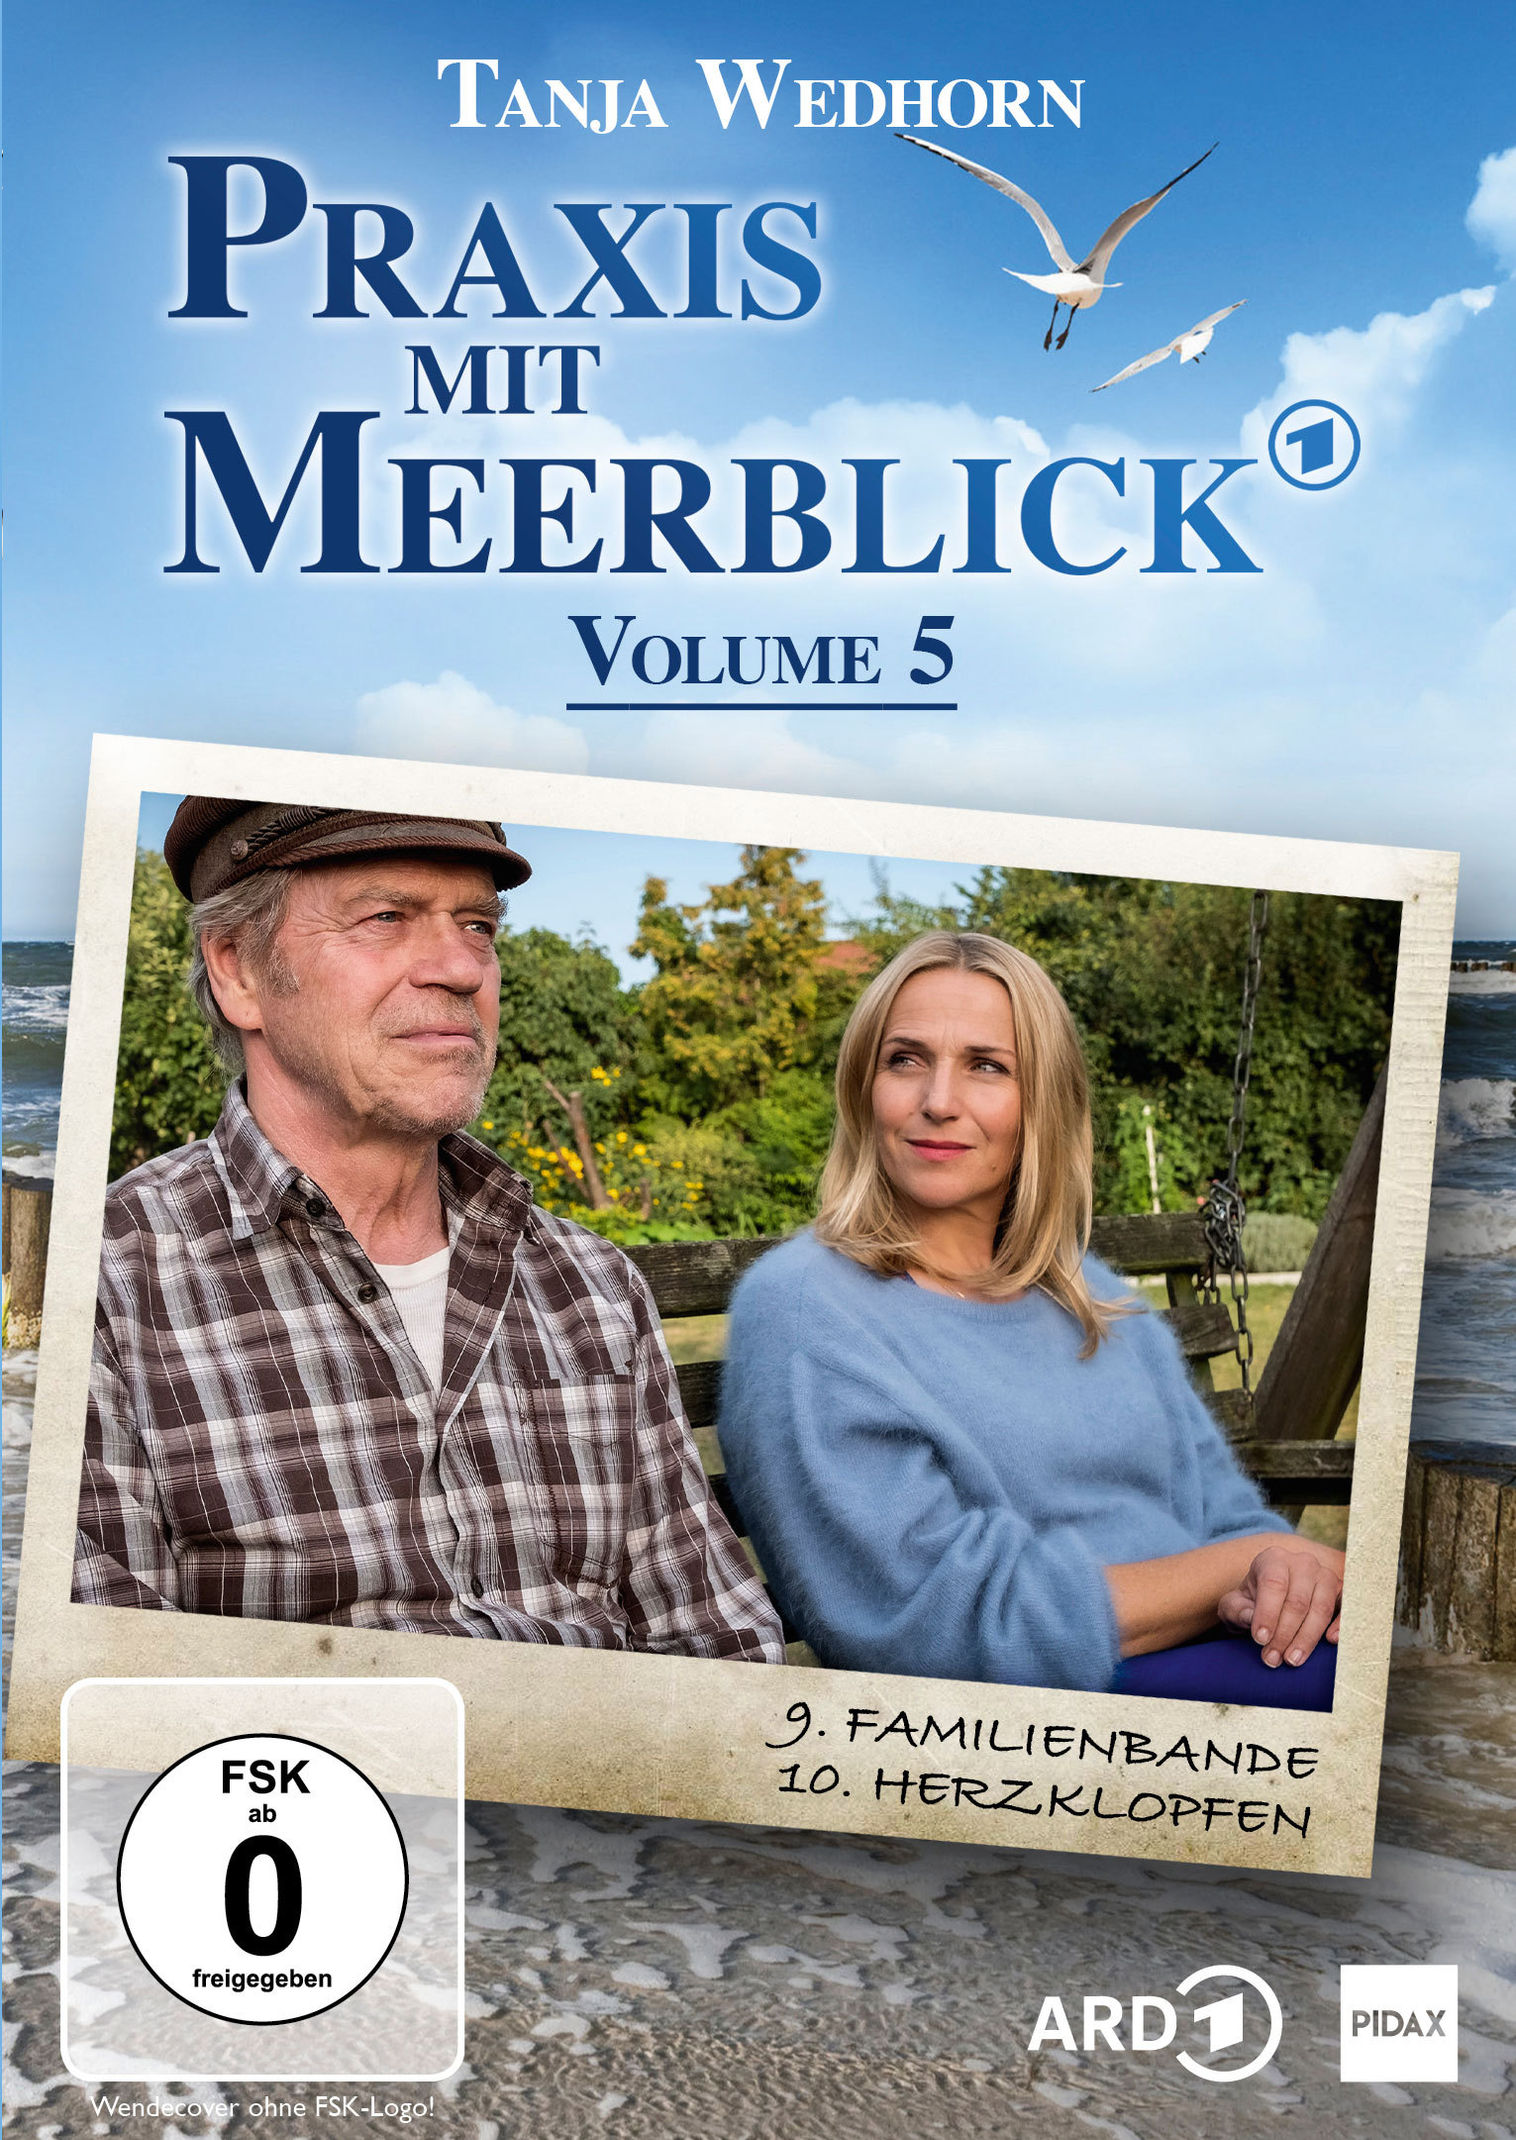 Praxis mit Meerblick, Vol. 5 DVD bei Weltbild.at bestellen